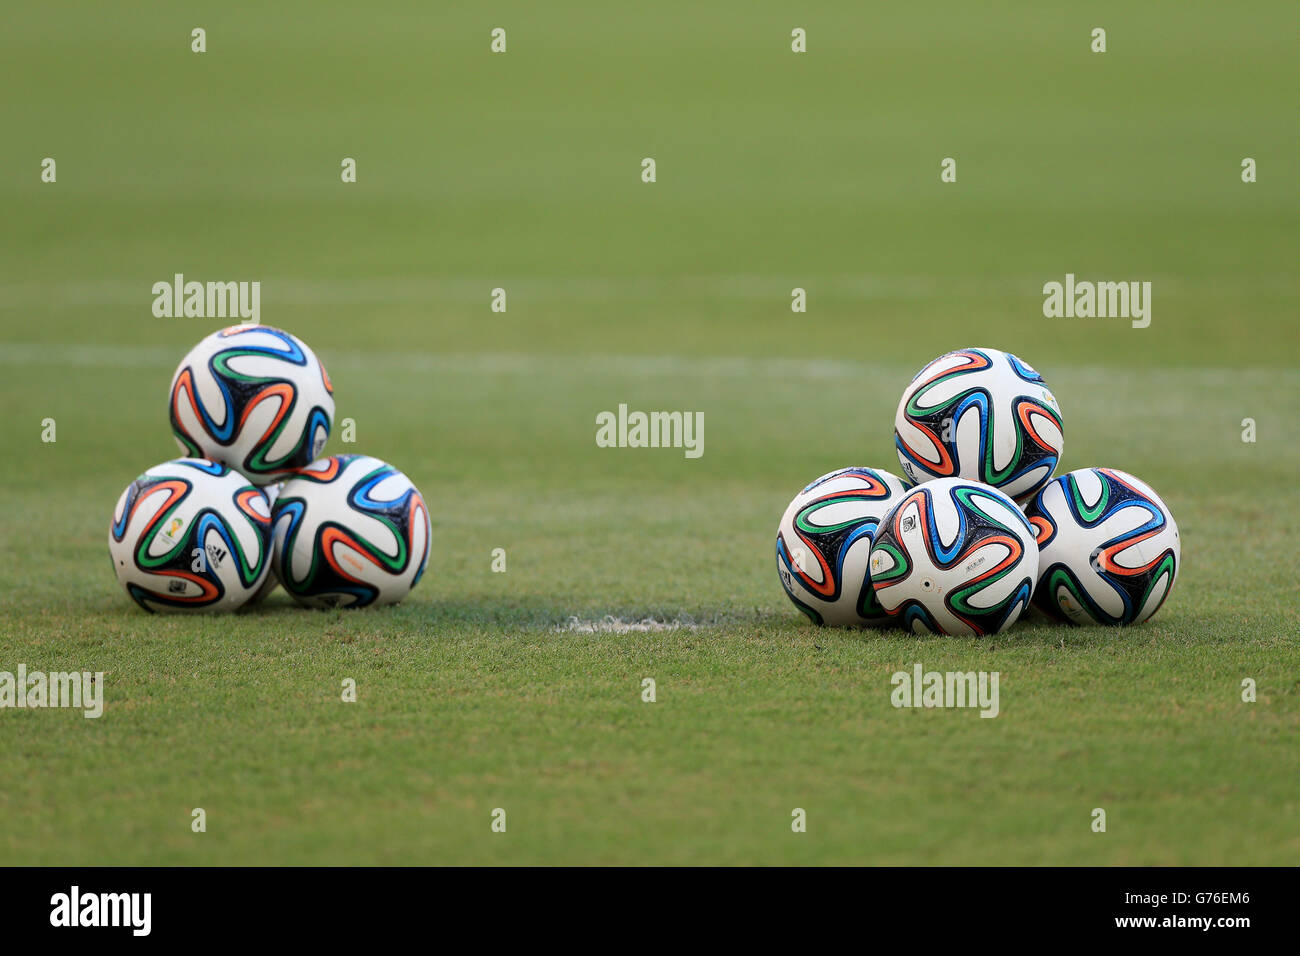 Football - coupe du monde de la FIFA 2014 - Round de 16 - Costa Rica / Grèce - Arena Pernambuco. Balles de match officiel Adidas Brazuca Banque D'Images